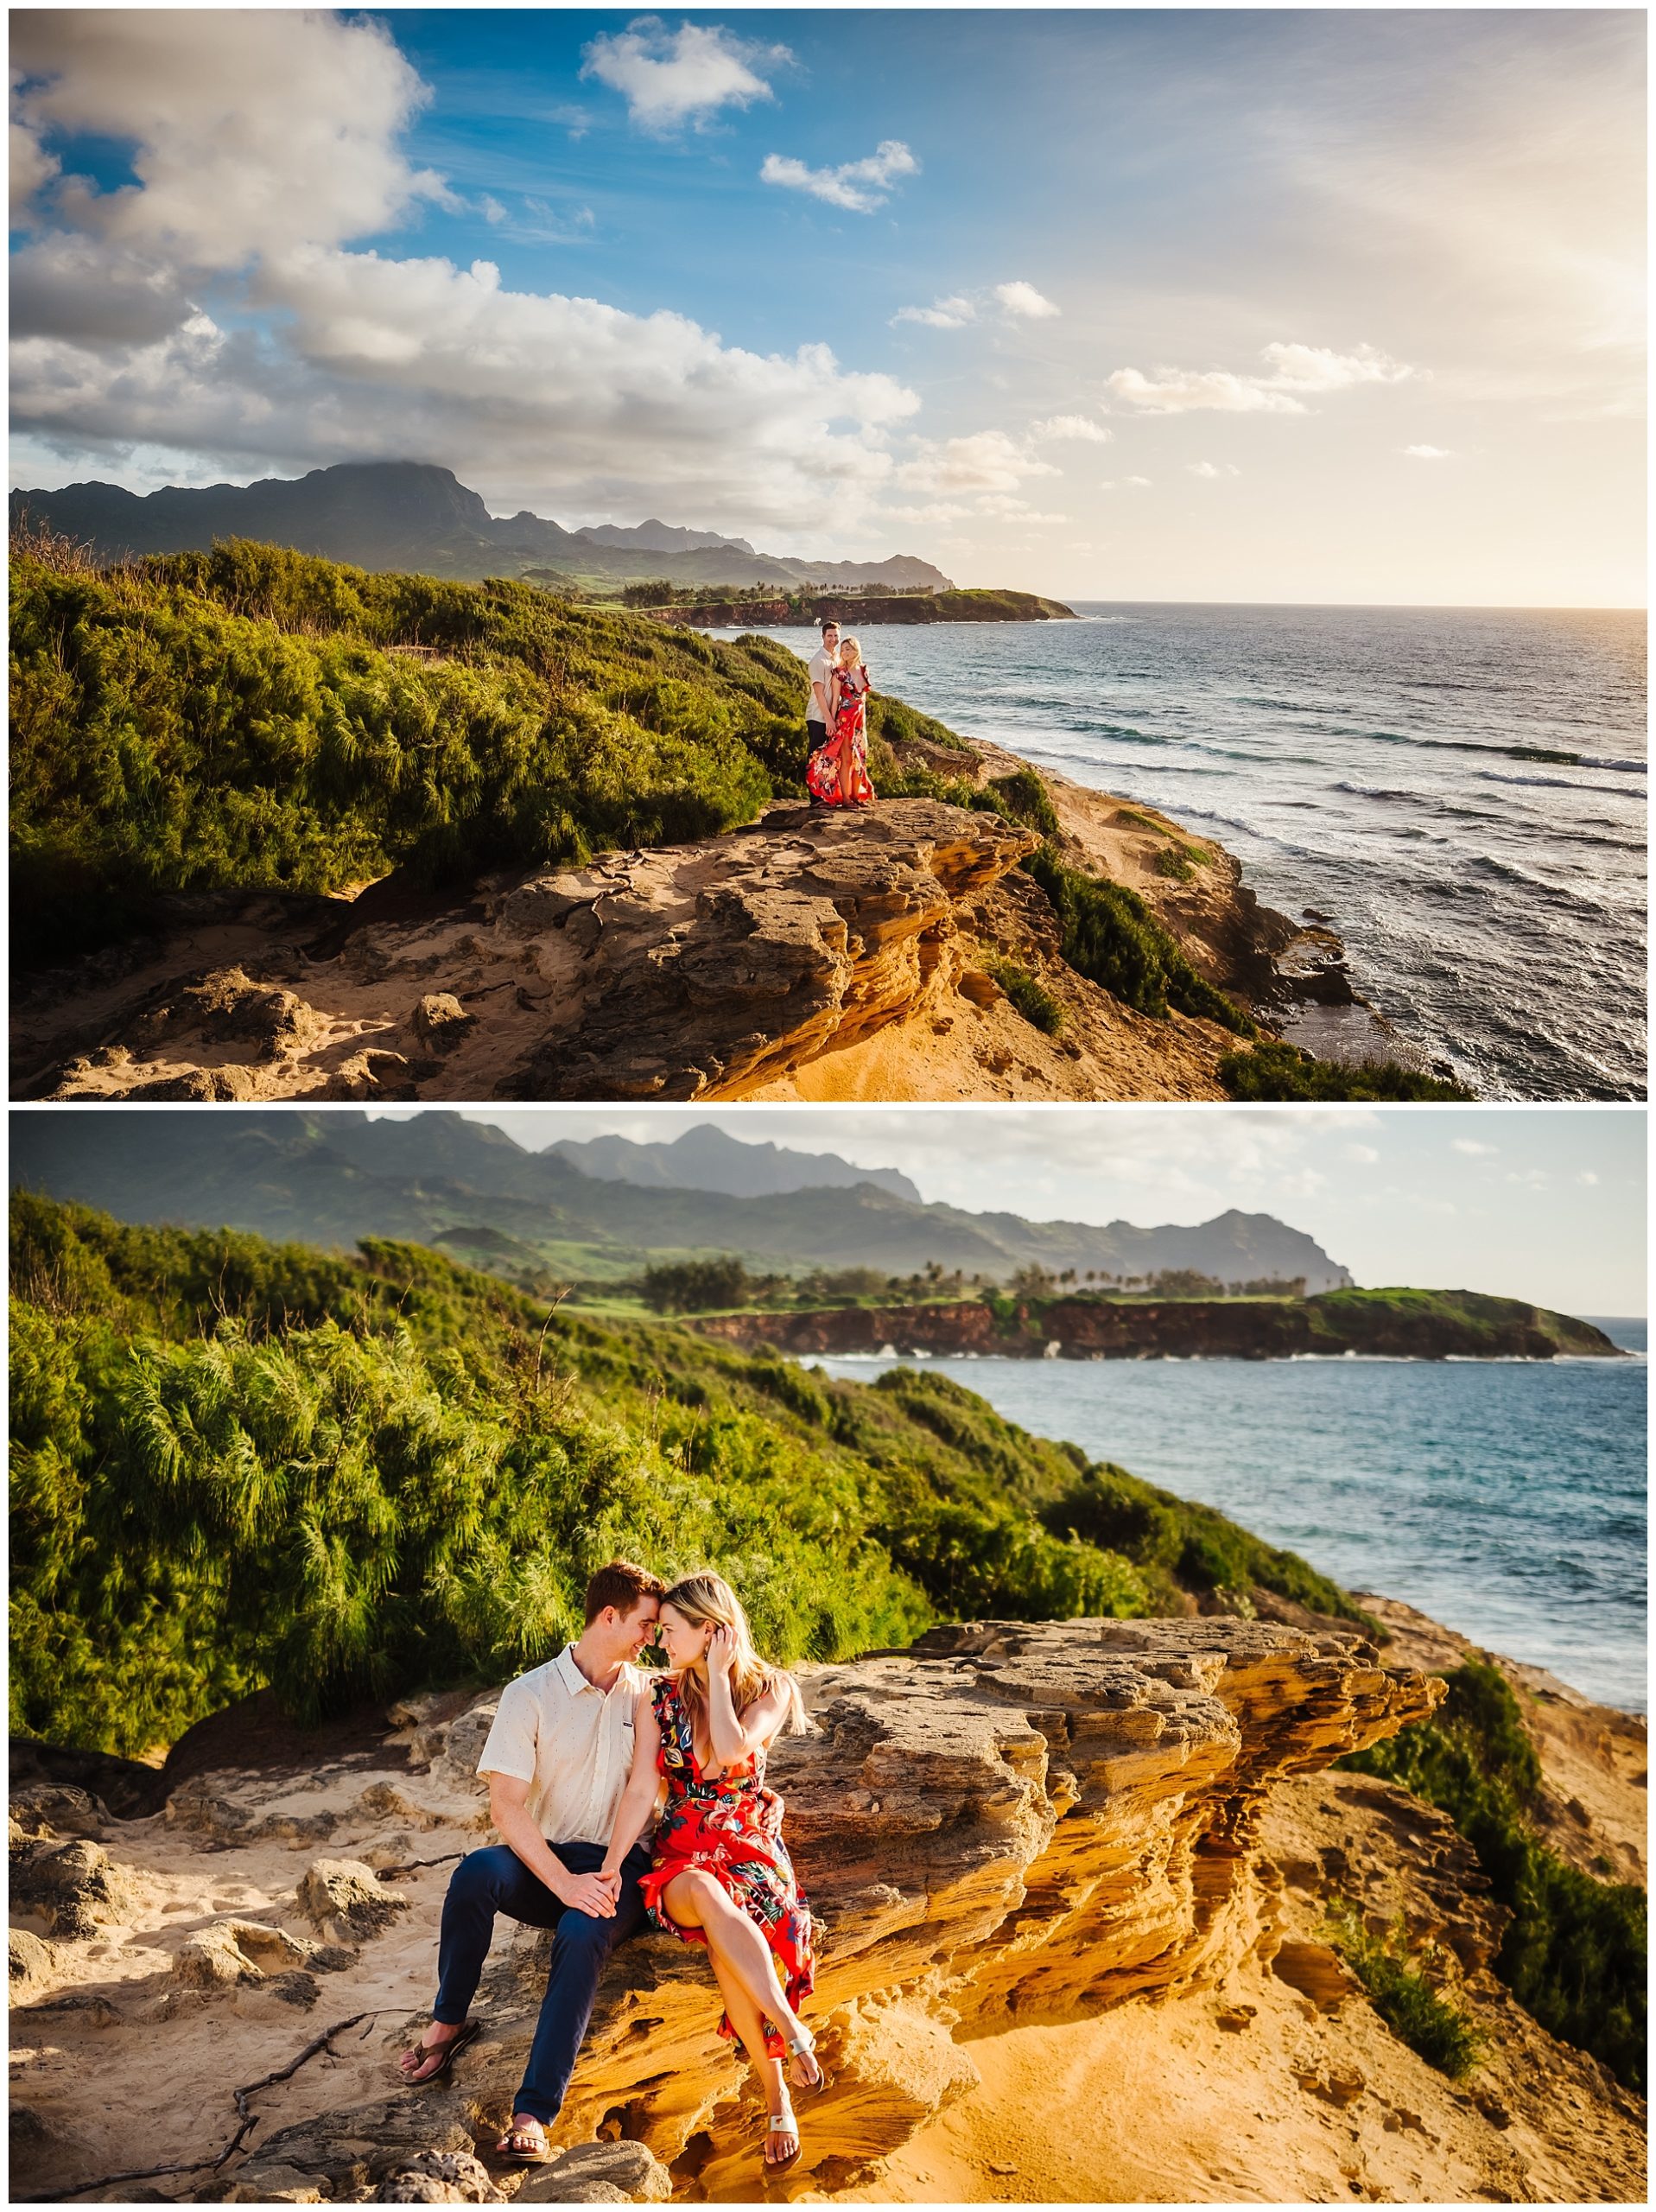 hawaiin-honeymoon-sunrise-portraits-kauai-grand-hystt-destination-photographer_0015.jpg